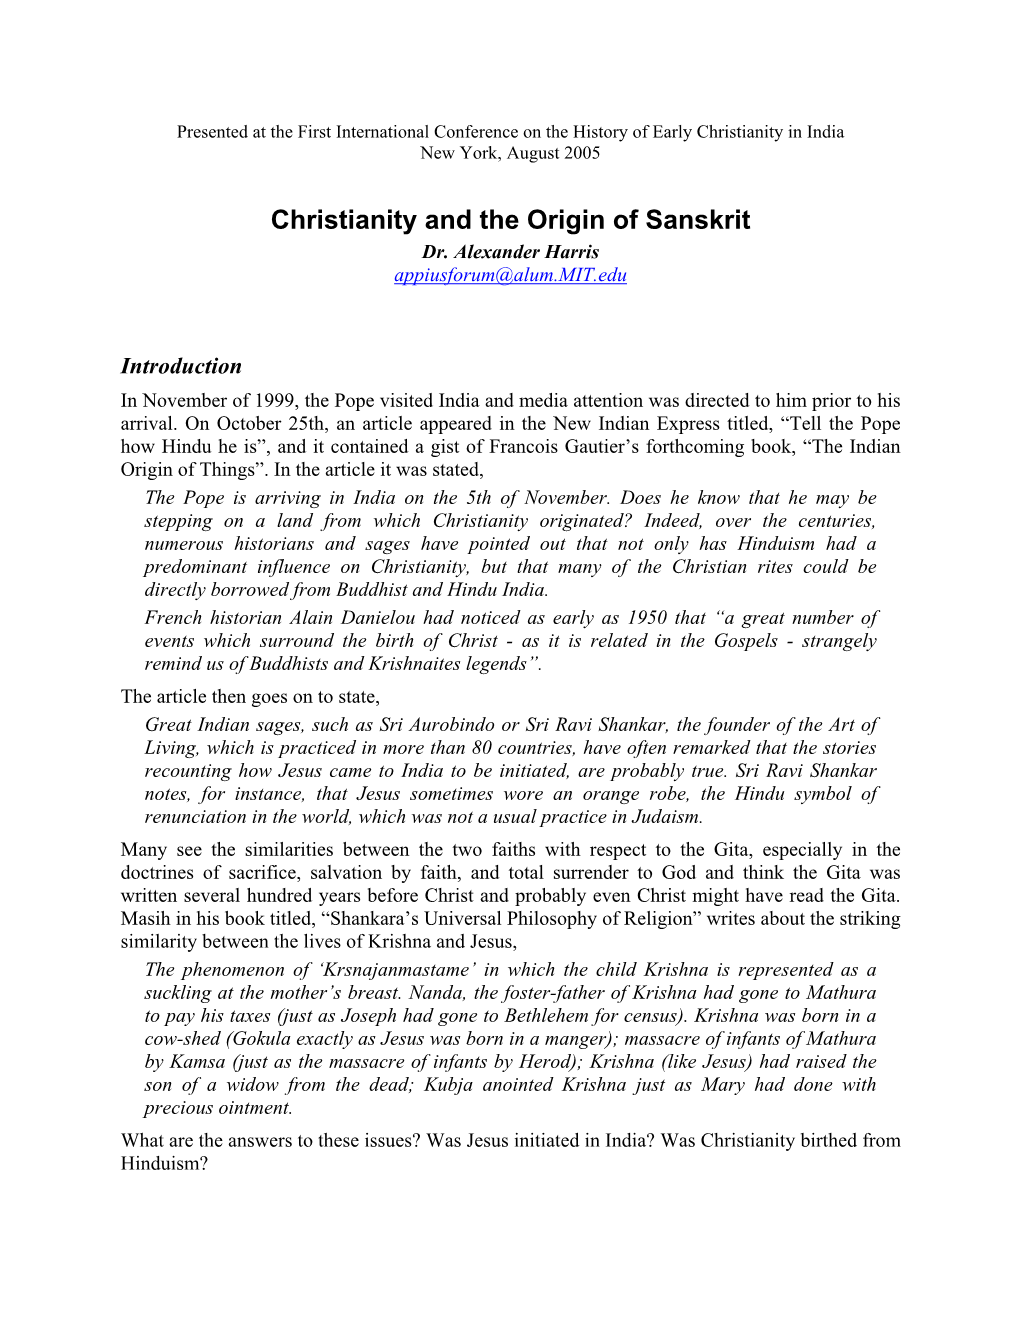 Christianity and the Origin of Sanskrit Dr